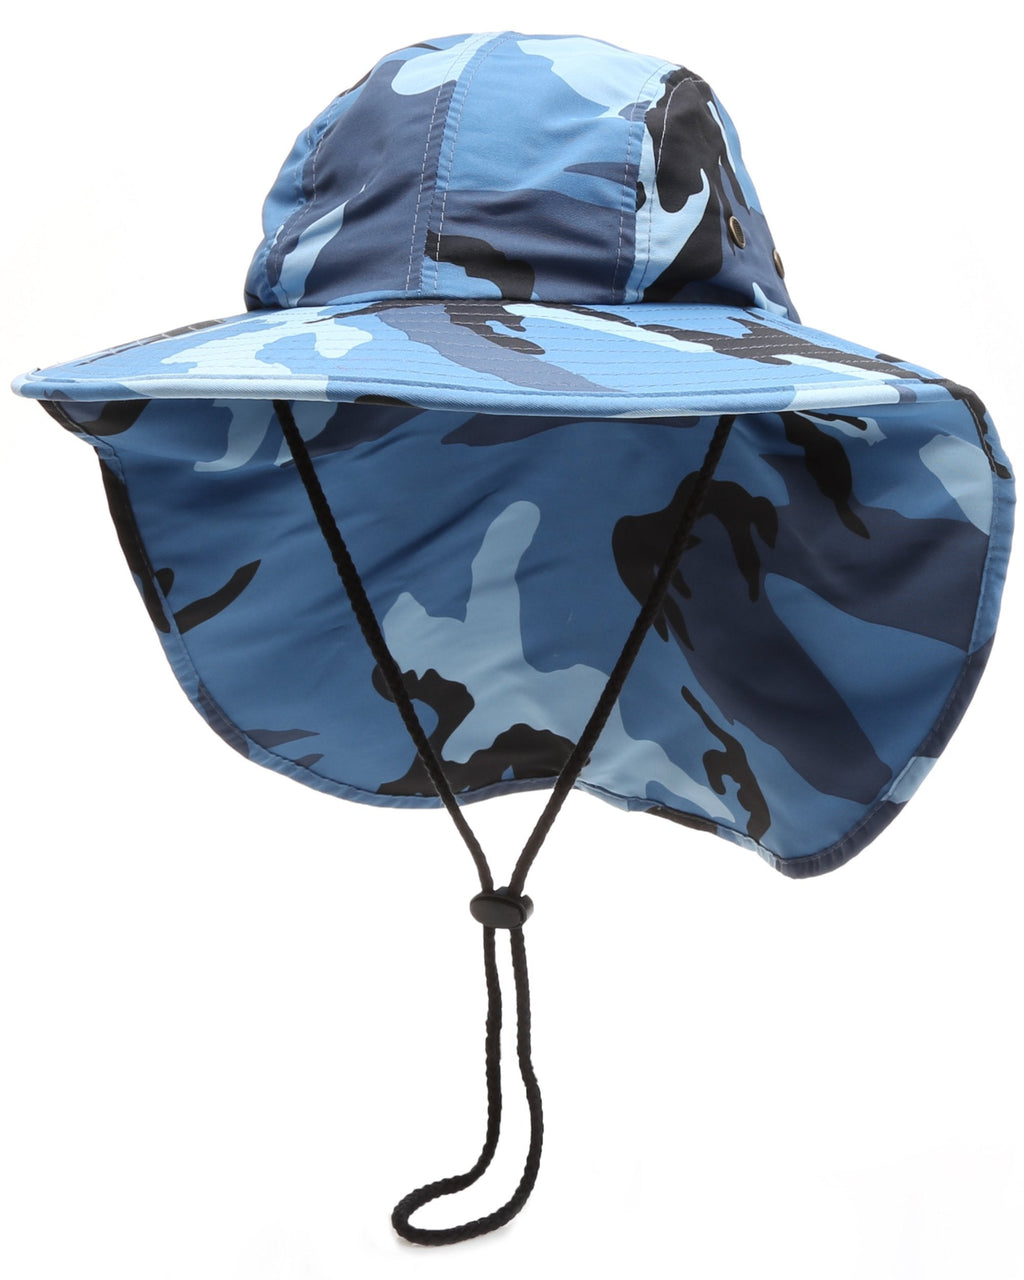 [Australia] - MIRMARU Outdoor Sun Protection Hunting Hiking Fishing Cap Wide Brim hat with Neck Flap Small-Medium Blue Sky Camo 